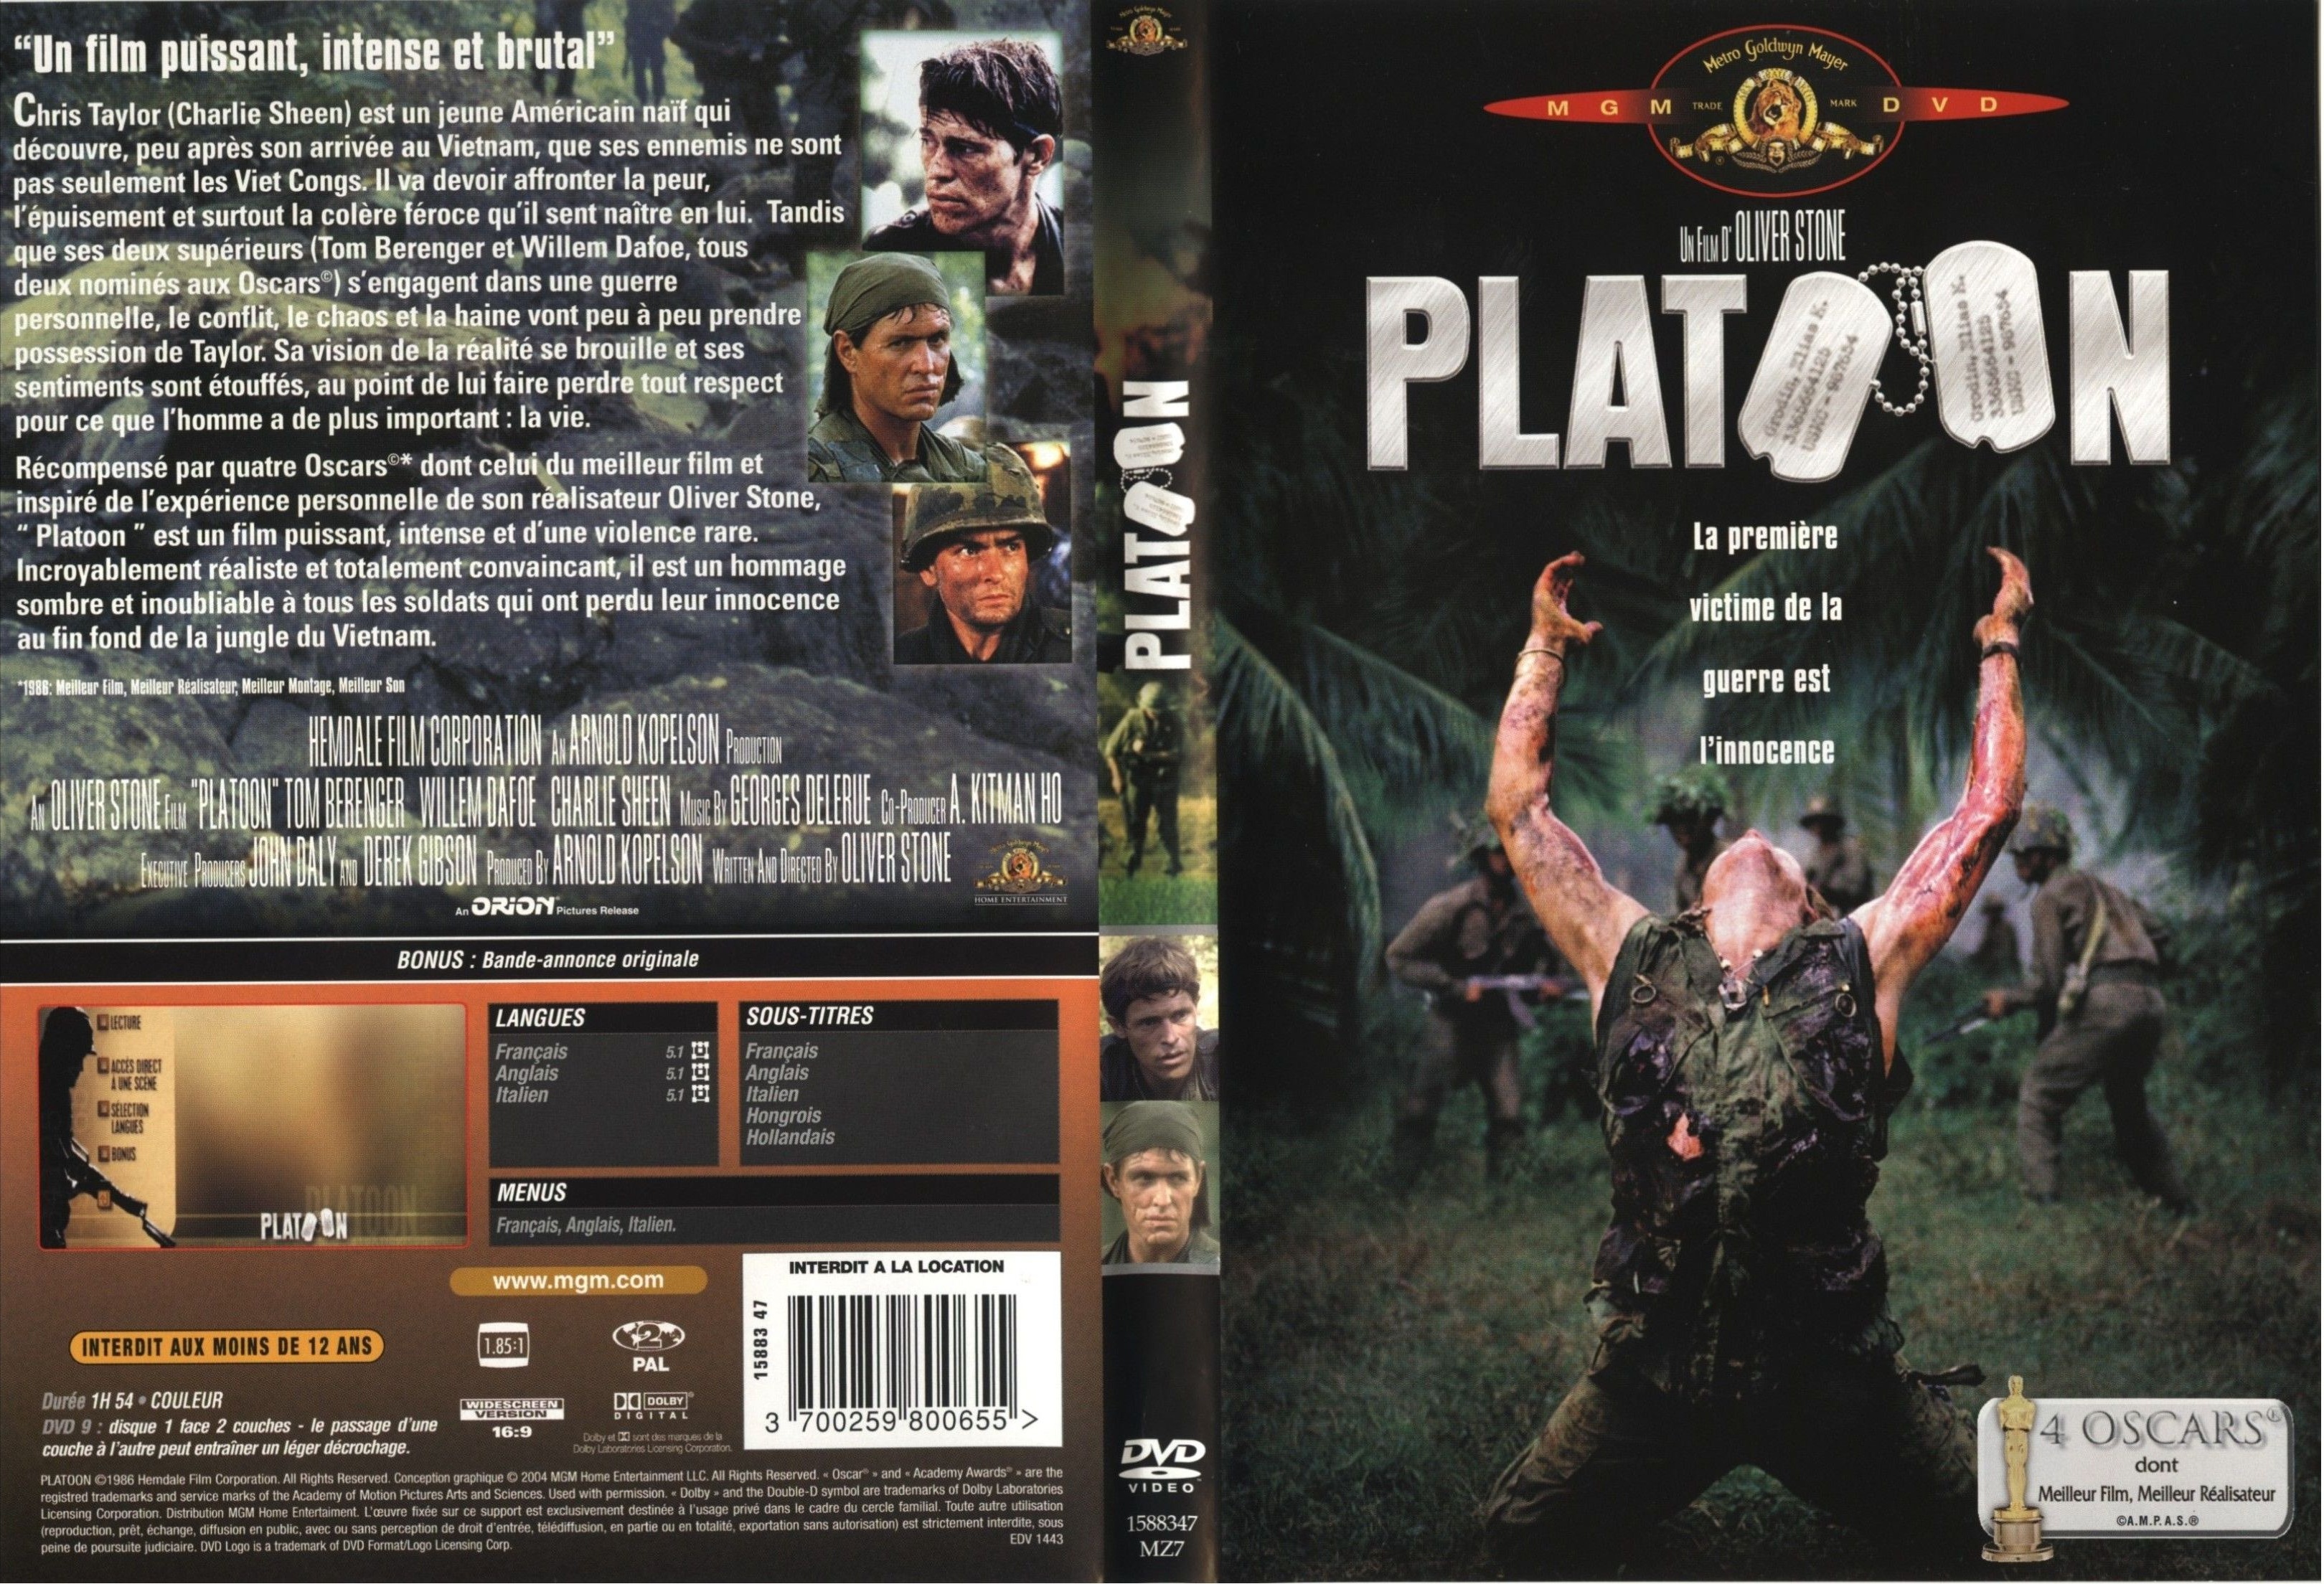 Jaquette DVD Platoon v3